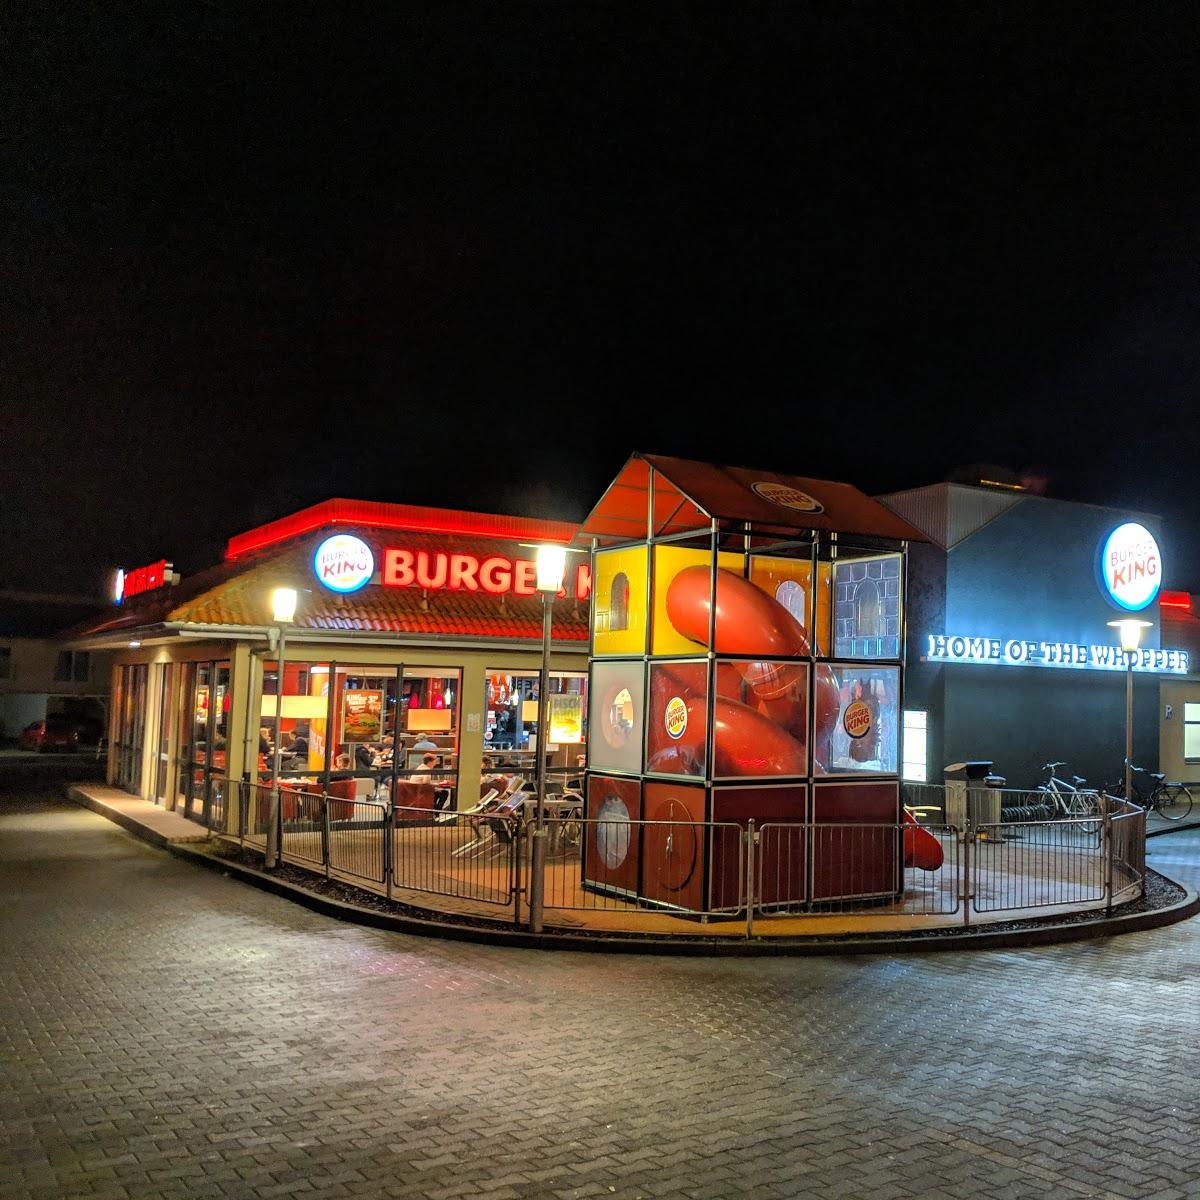 Restaurant "Burger King" in Wesel